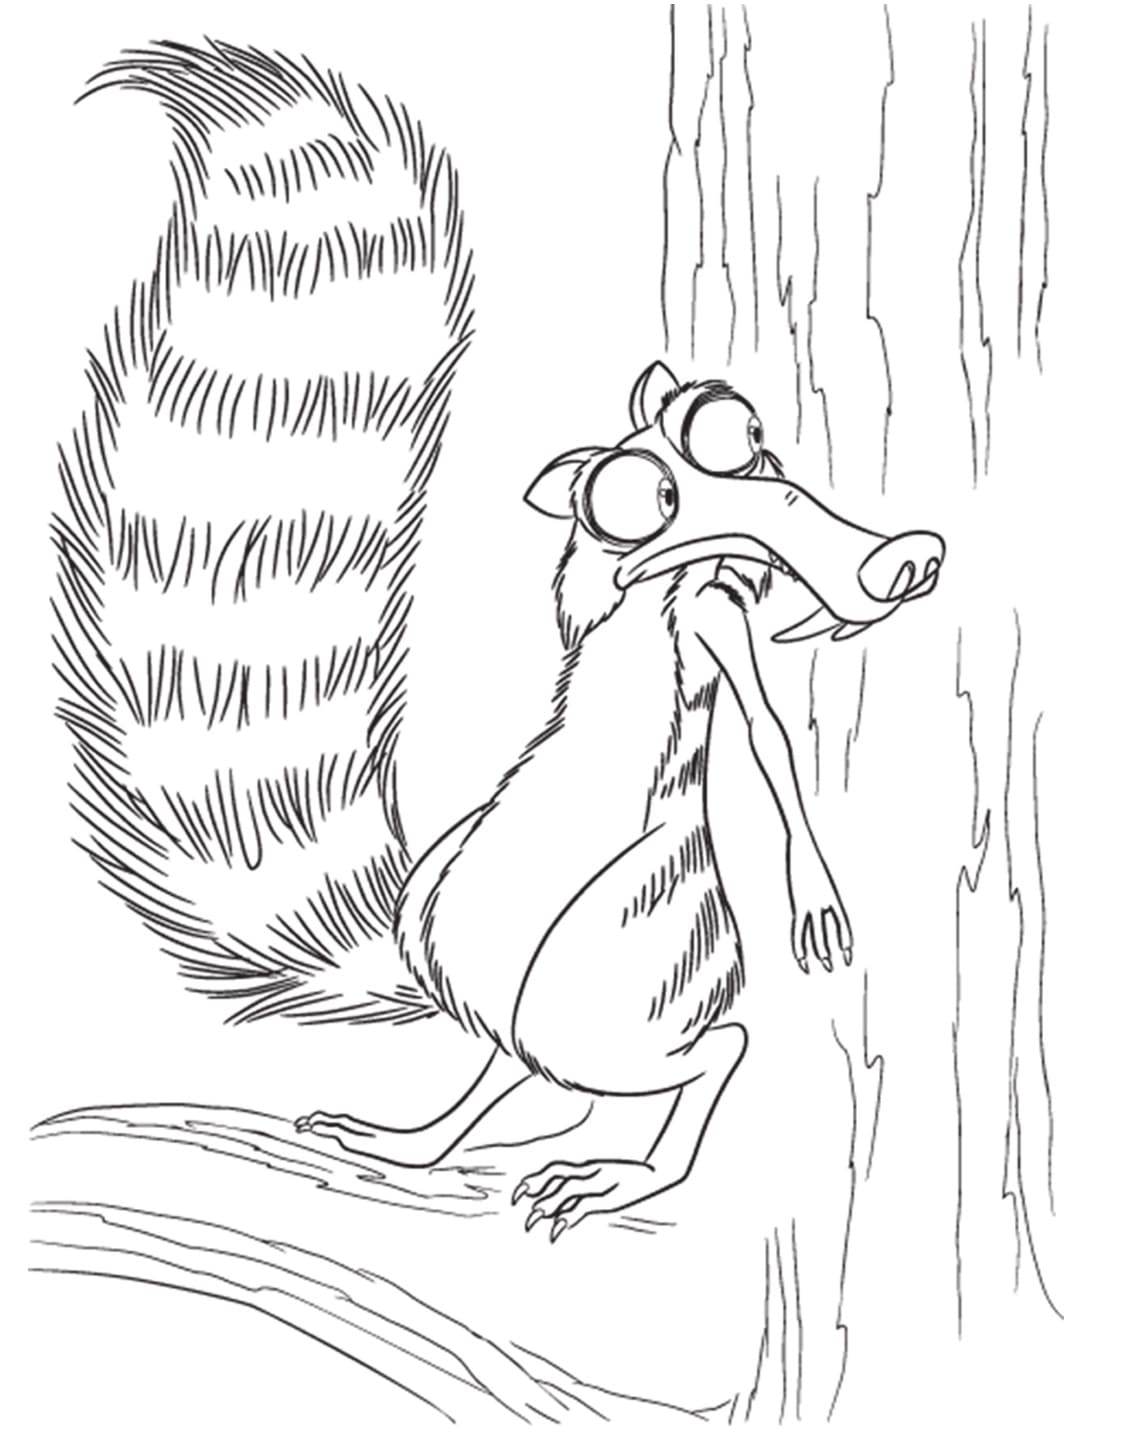 Scrat on a Tree